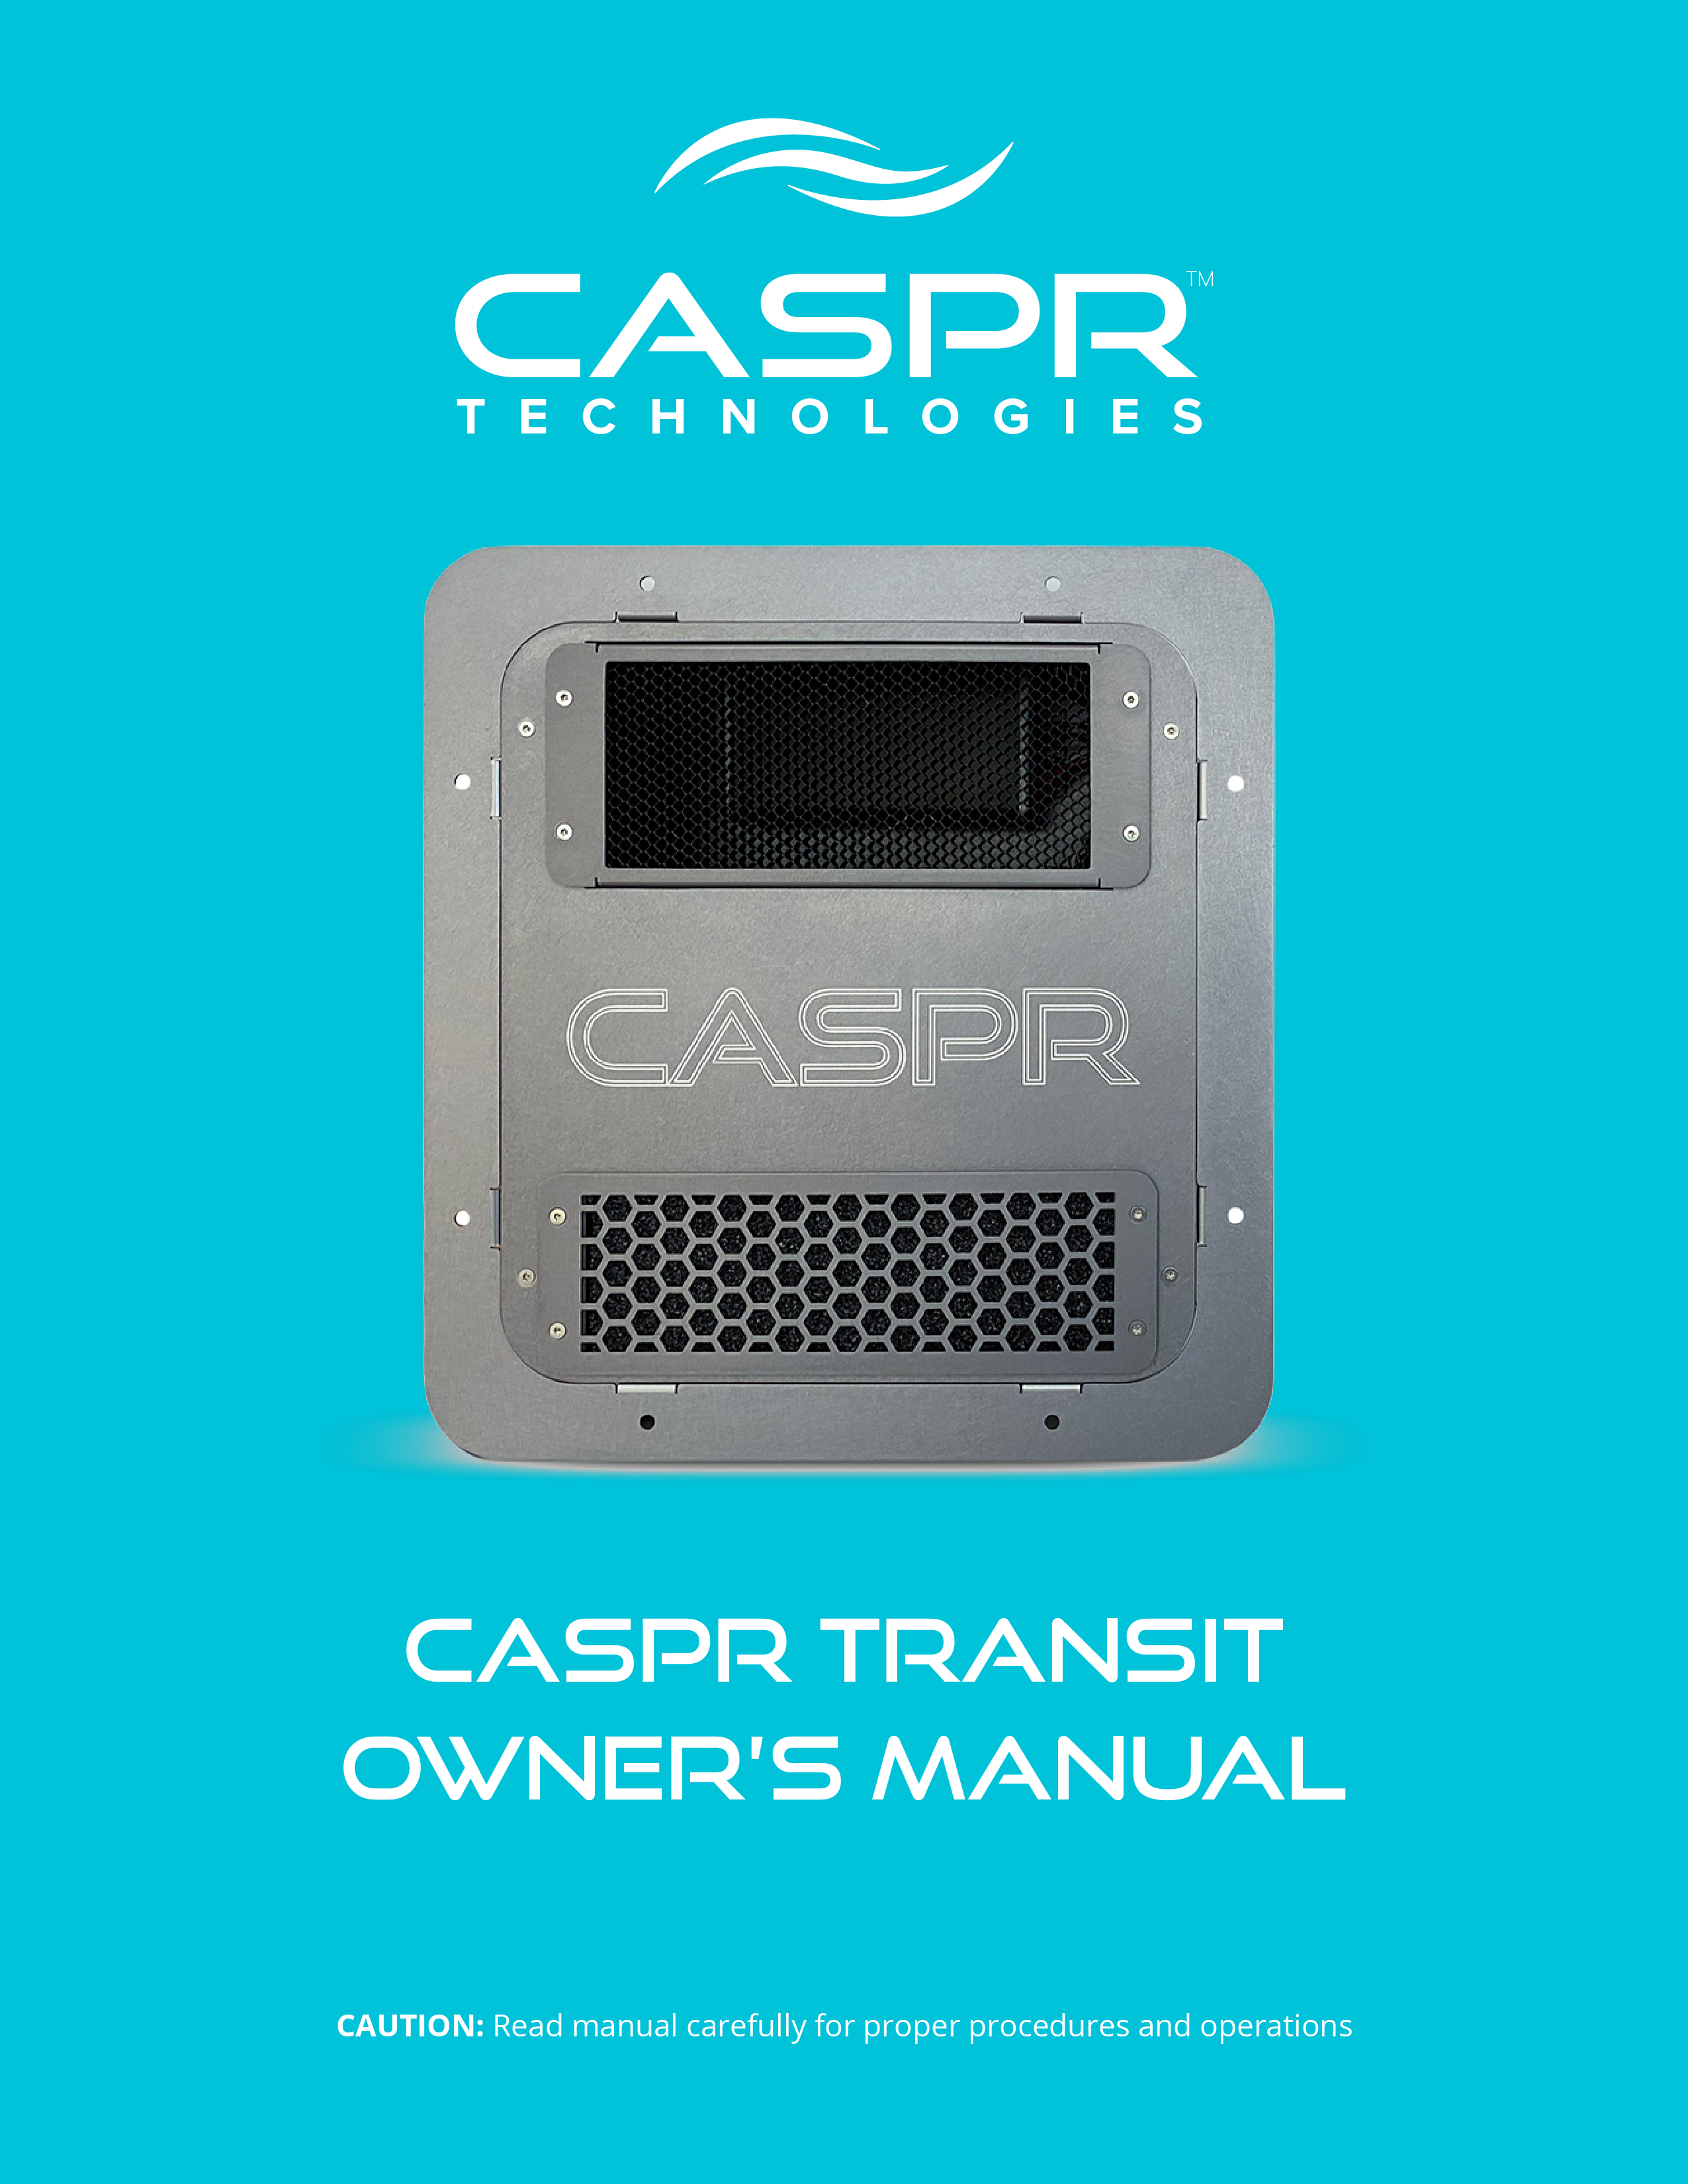 CASPR Transit Manual